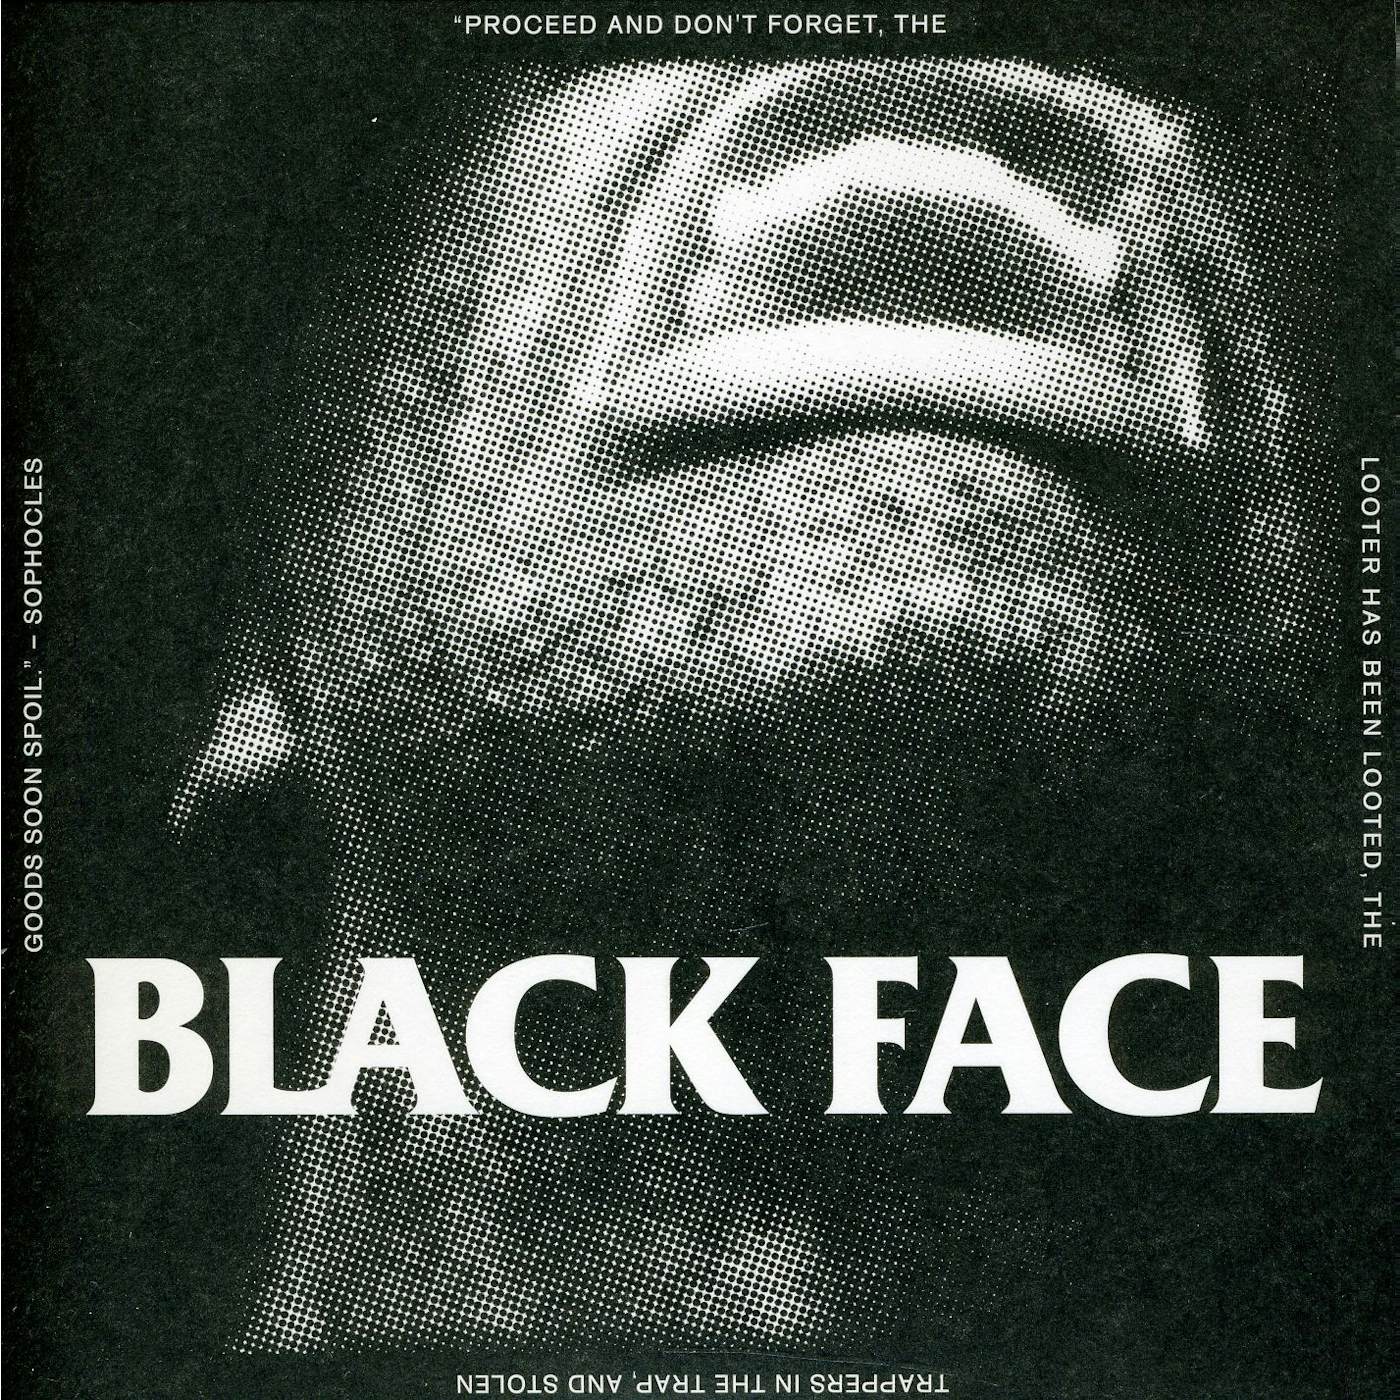 Black Face I WANT TO KILL B/W MONSTER Vinyl Record